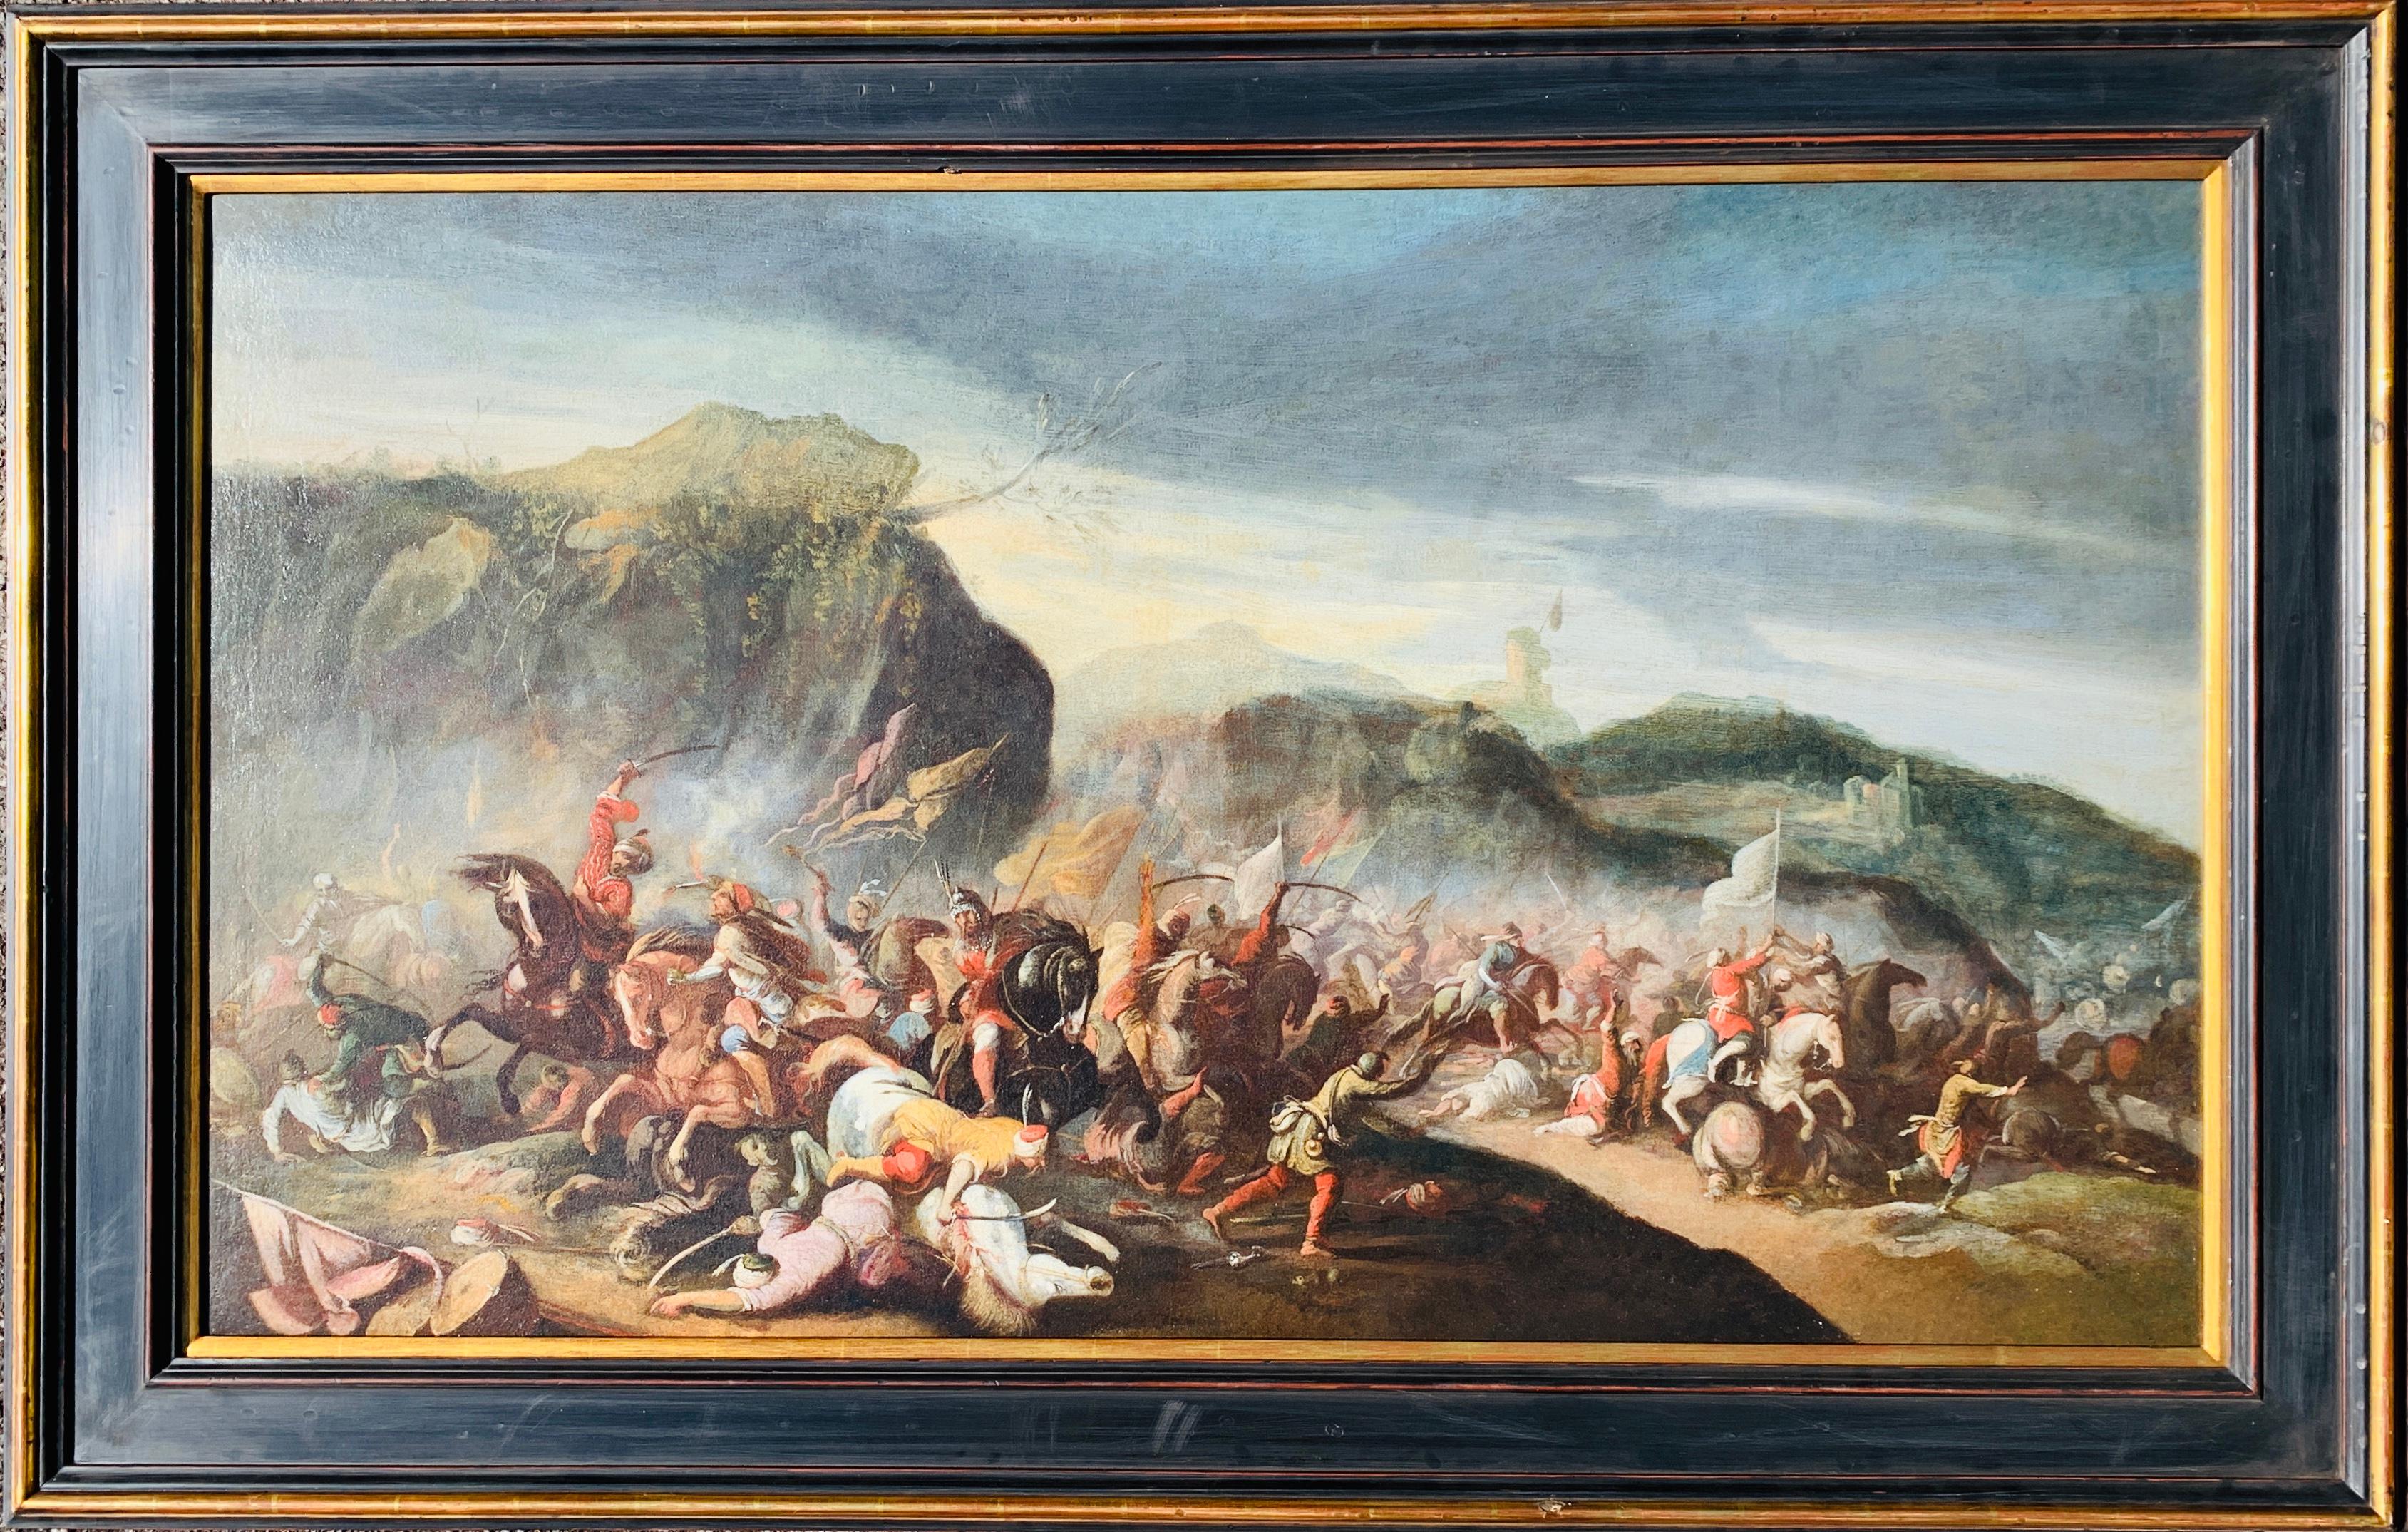 17th century Italian Horse Battle scene between Crusaders and their enemy